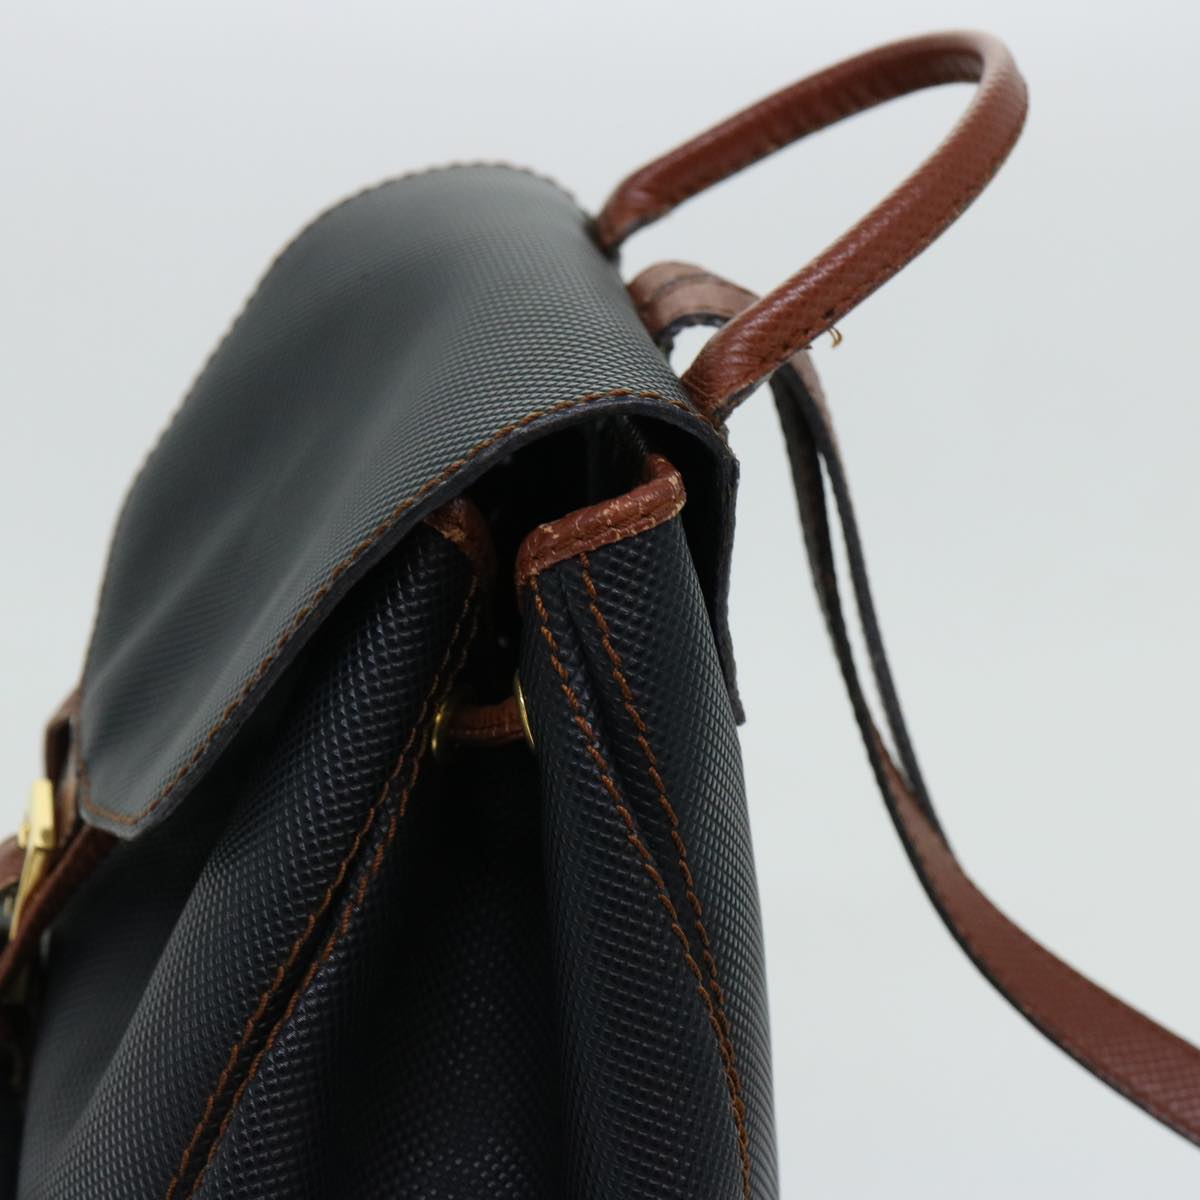 BOTTEGA VENETA Backpack PVC Leather Black Auth bs13237